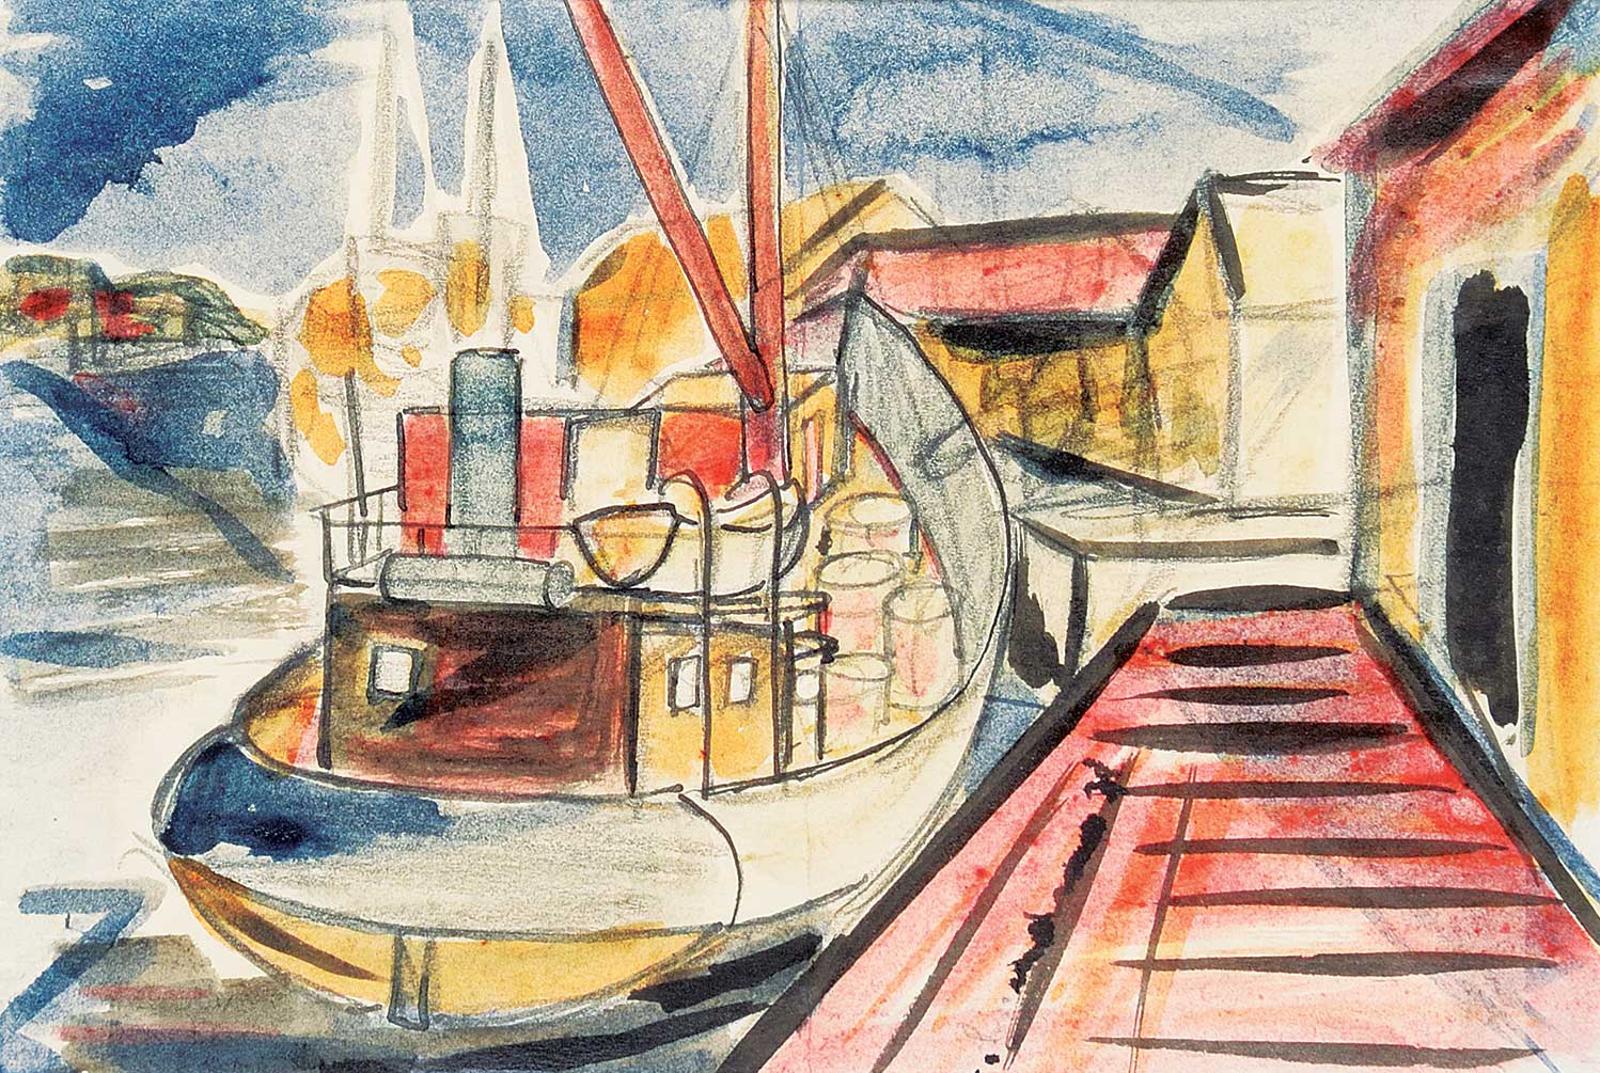 Friedrich Wilhelm (Fritz) Brandtner (1896-1969) - Untitled - Tug Boat at Dock